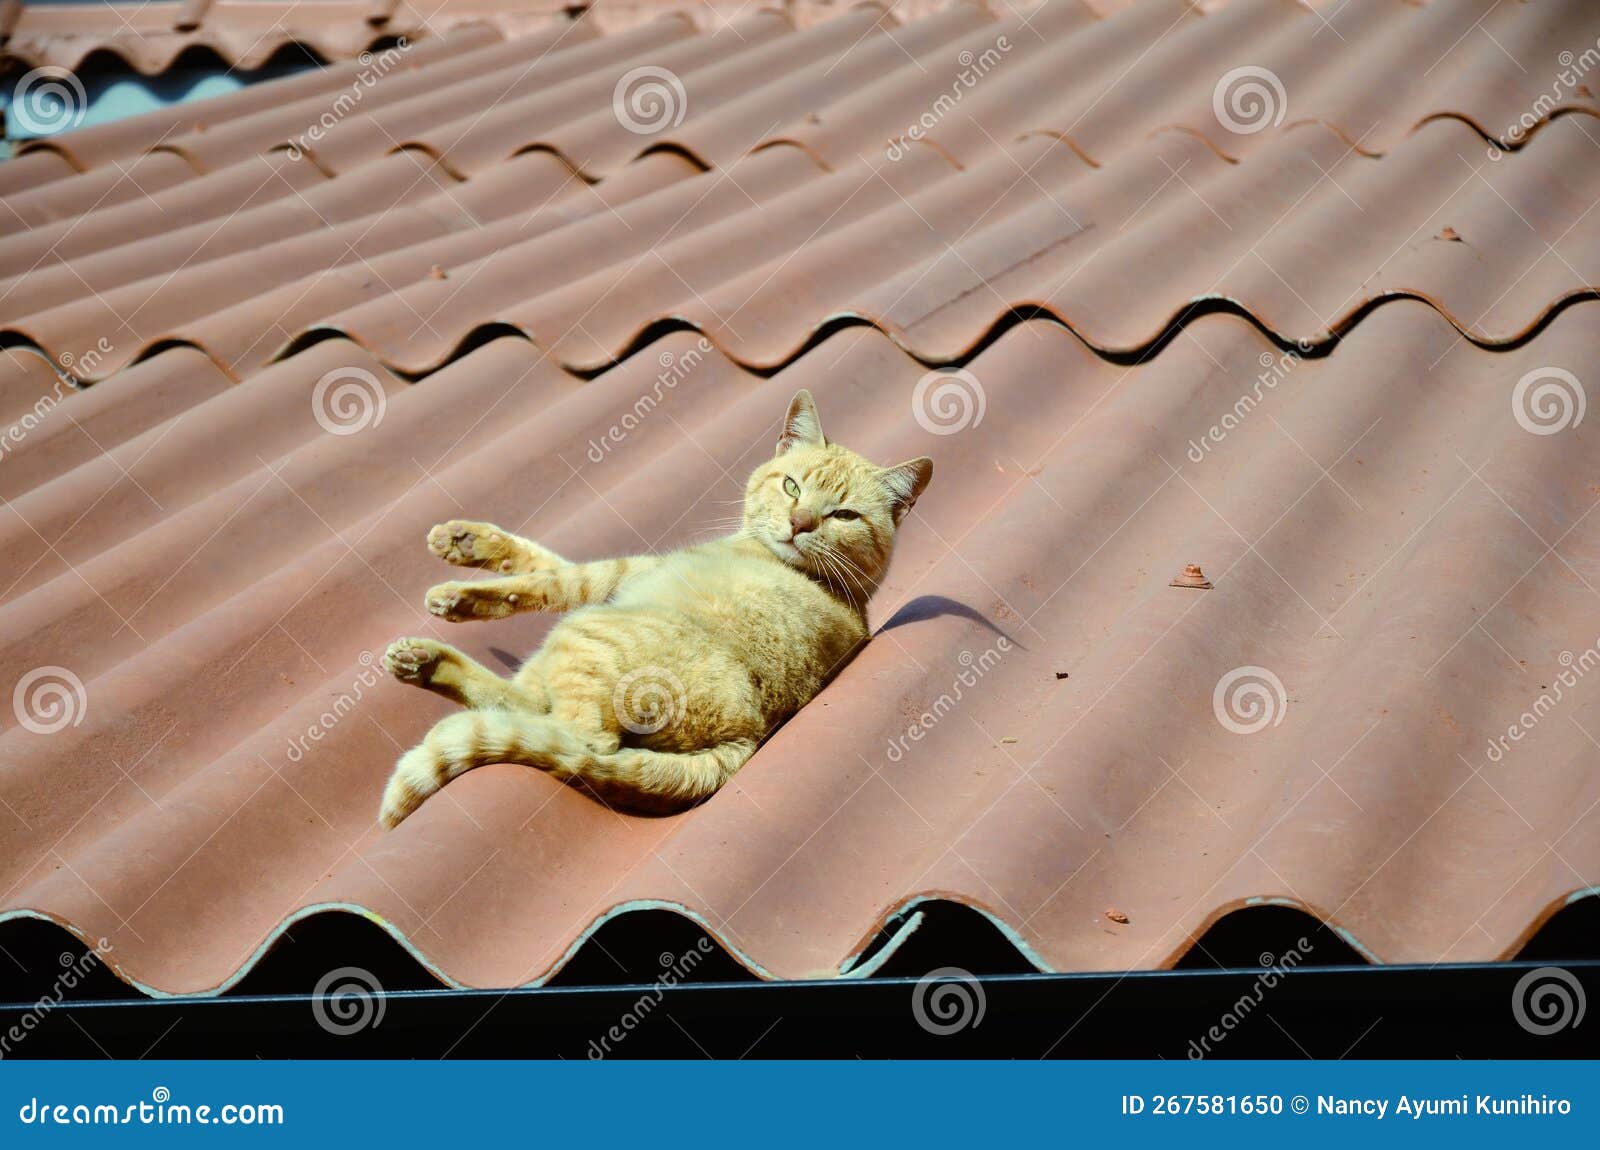 orange cat felis catus slack lying peacefully on the roof